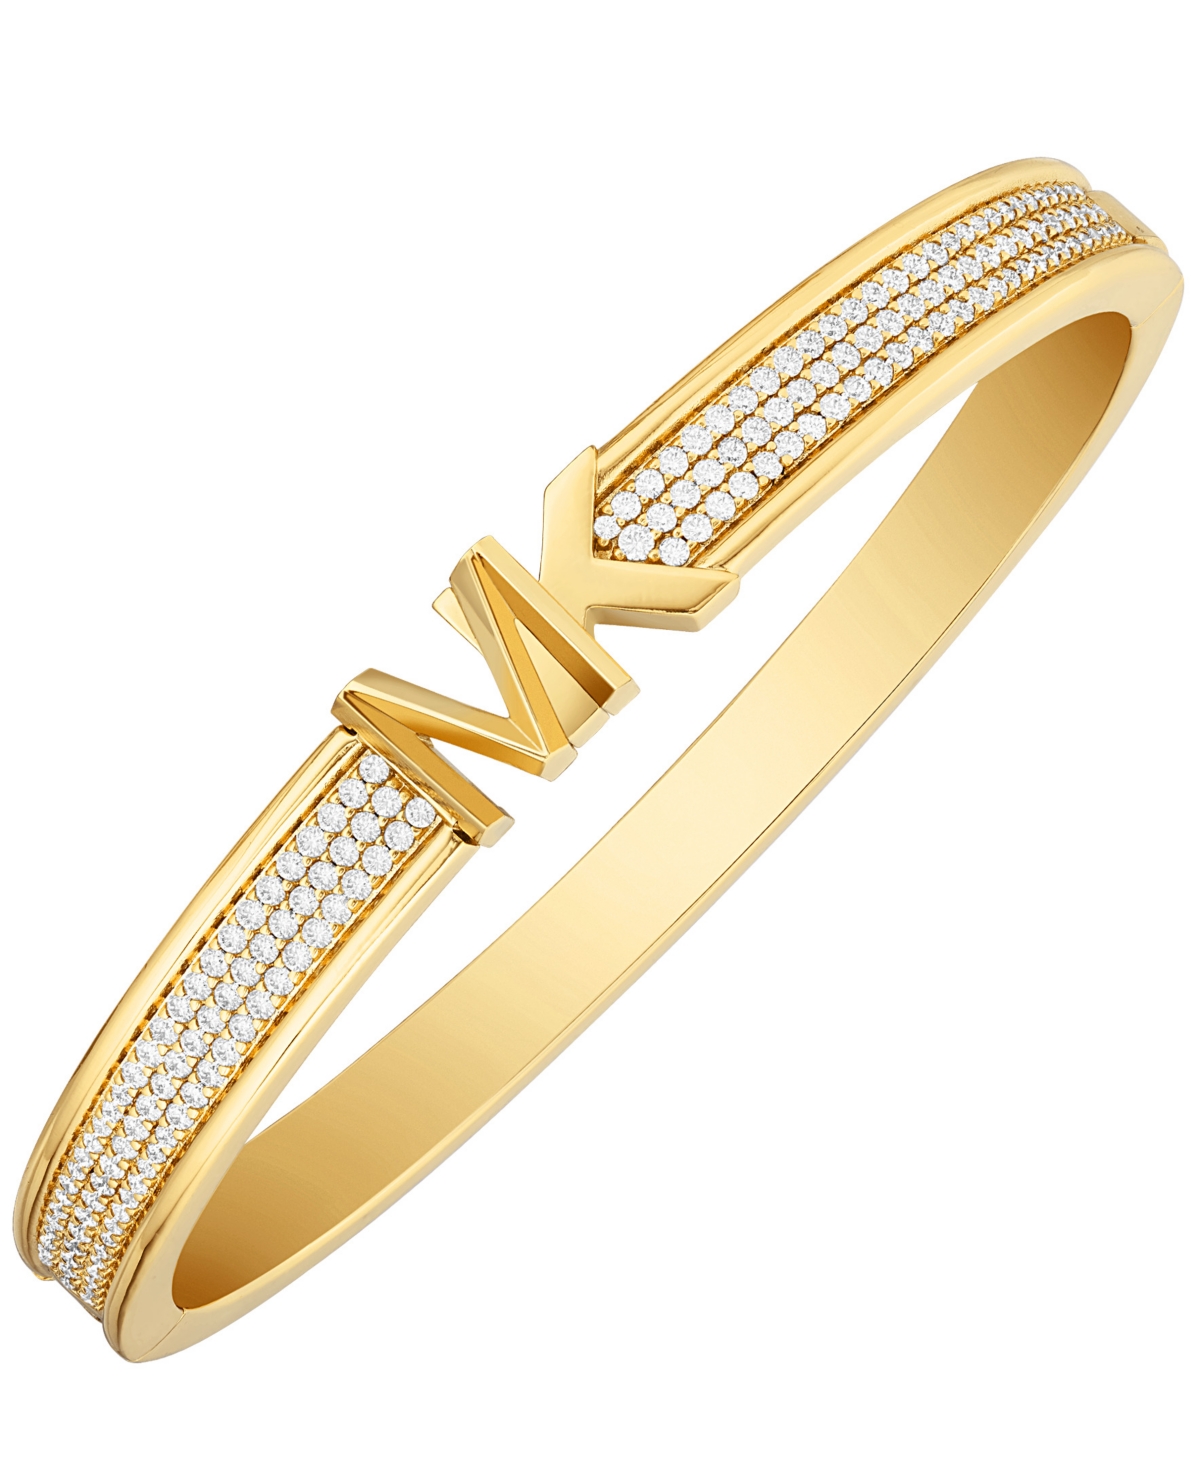 Michael Kors Brass Pave Bangle Bracelet In Gold Plating